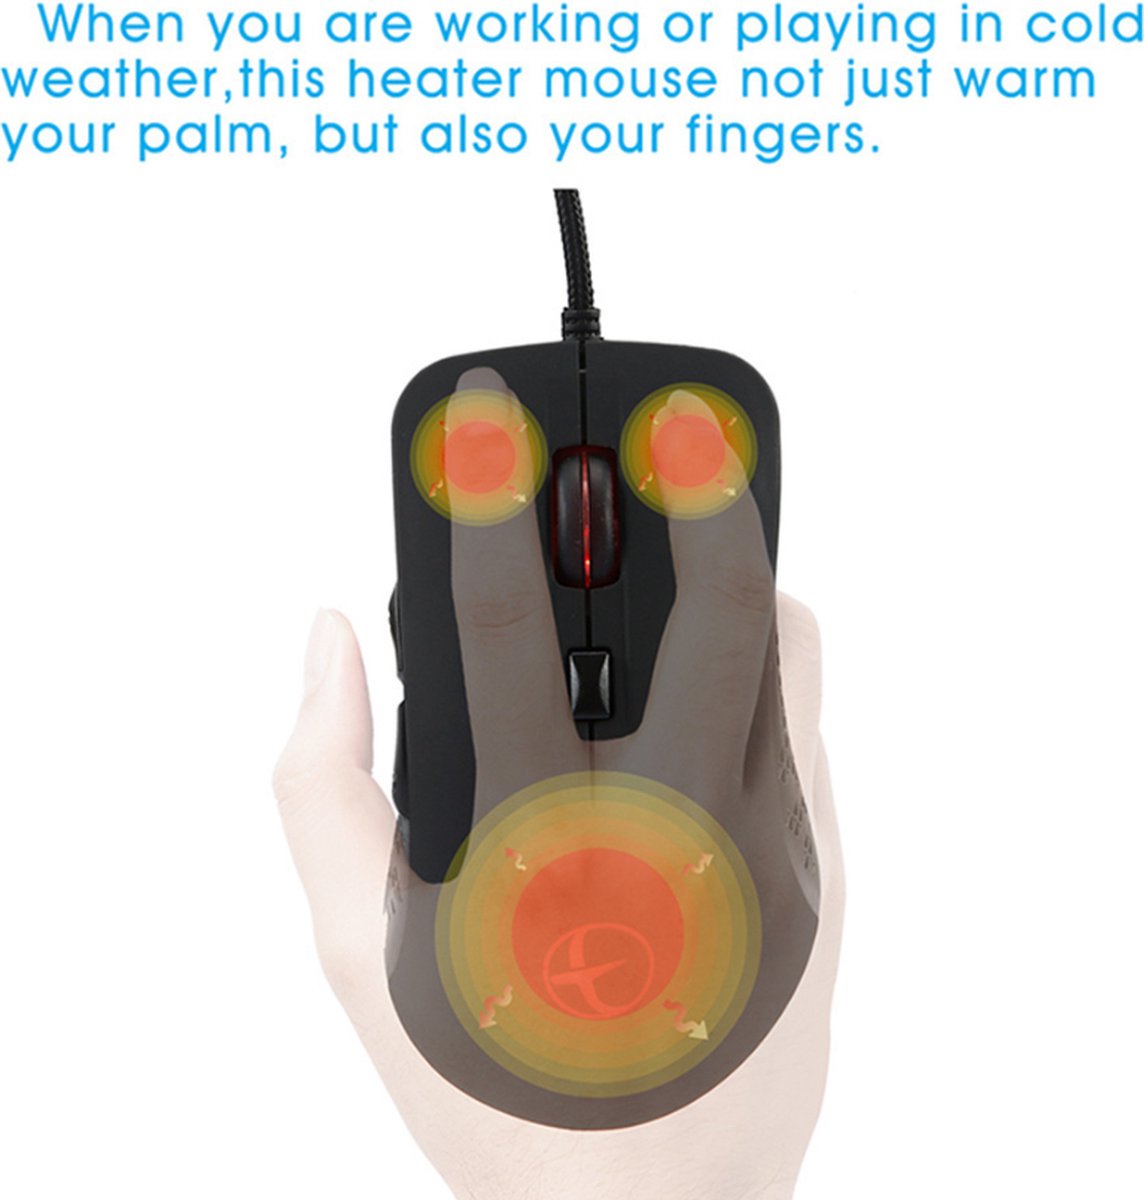 verwarmde muis - verwarmde muismat - muis met verwarmingelement